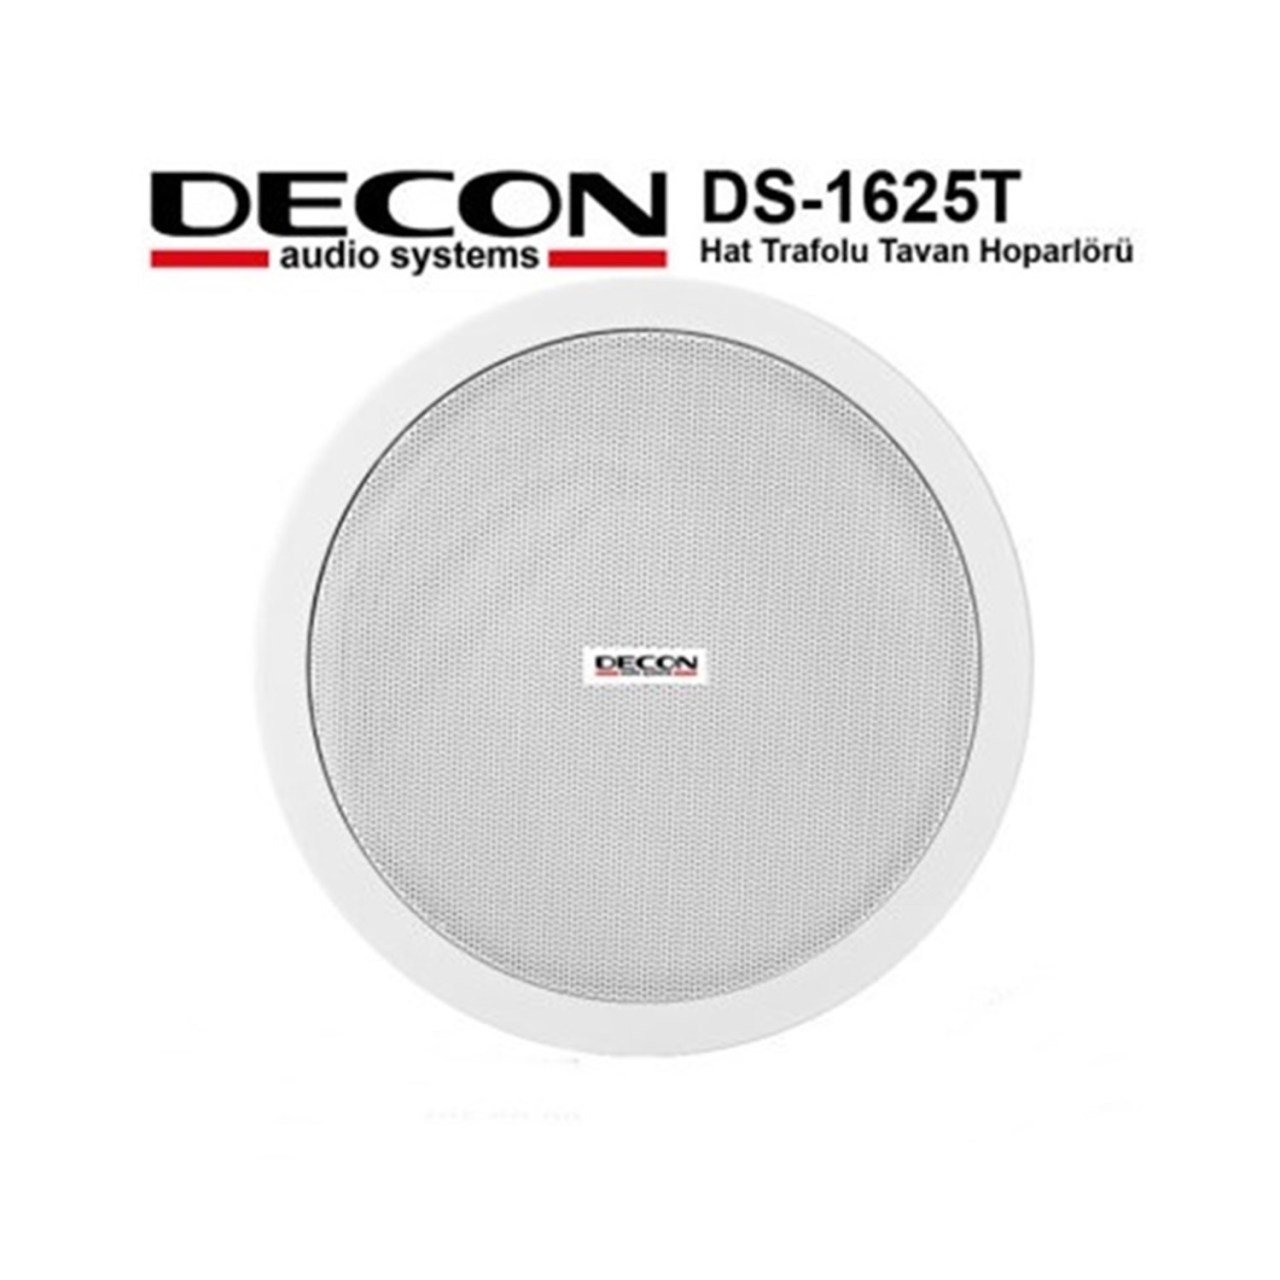 DECON DS-1625T 6.5'' 16cm 10 Watt Hat Trafolu Tavan Hoparlörü